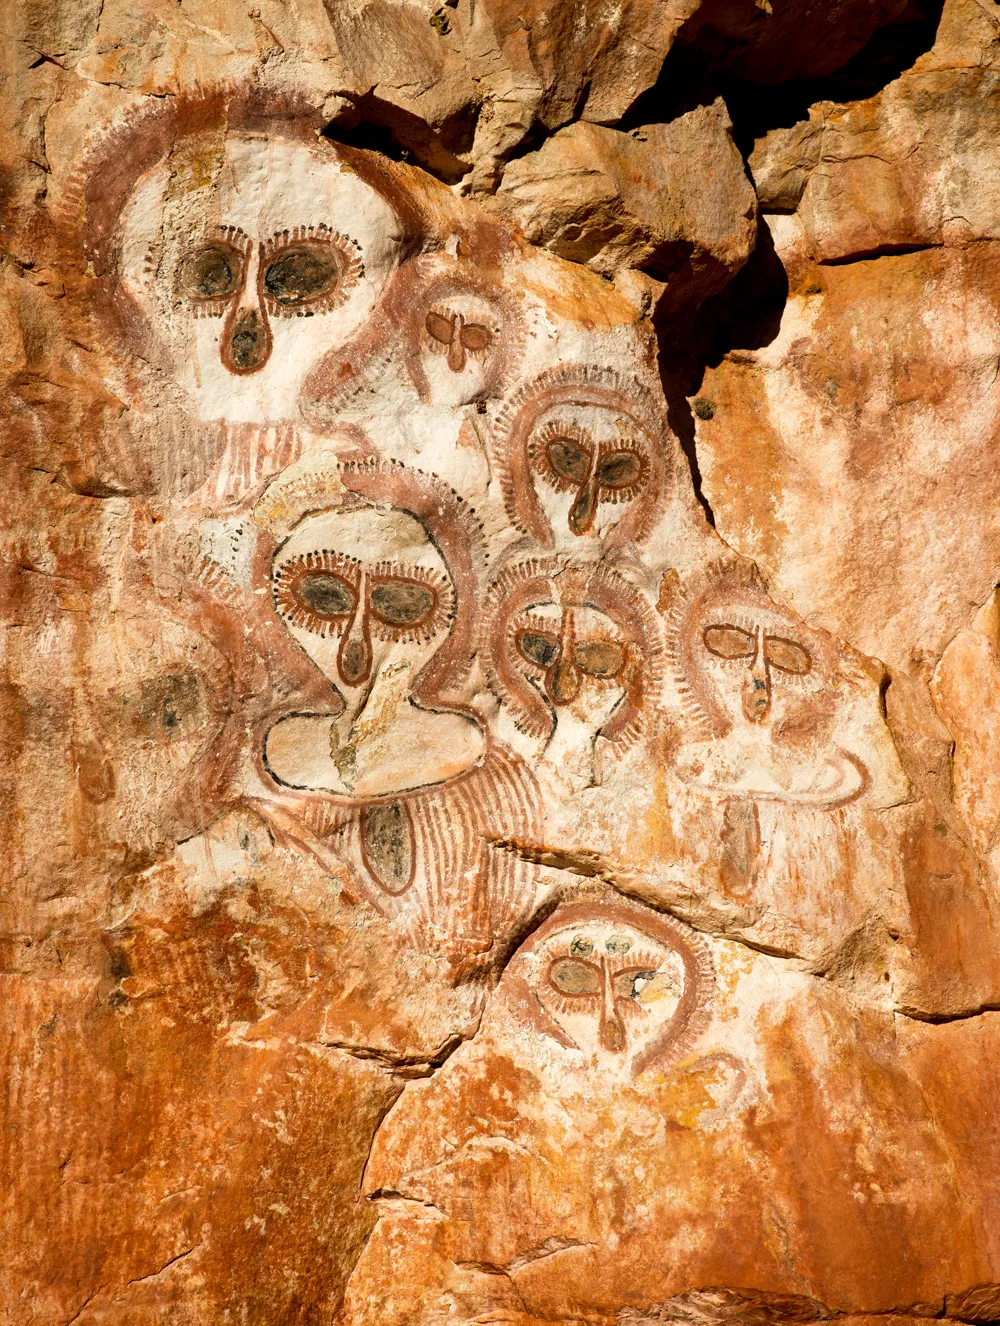 Kimberley rock paintings